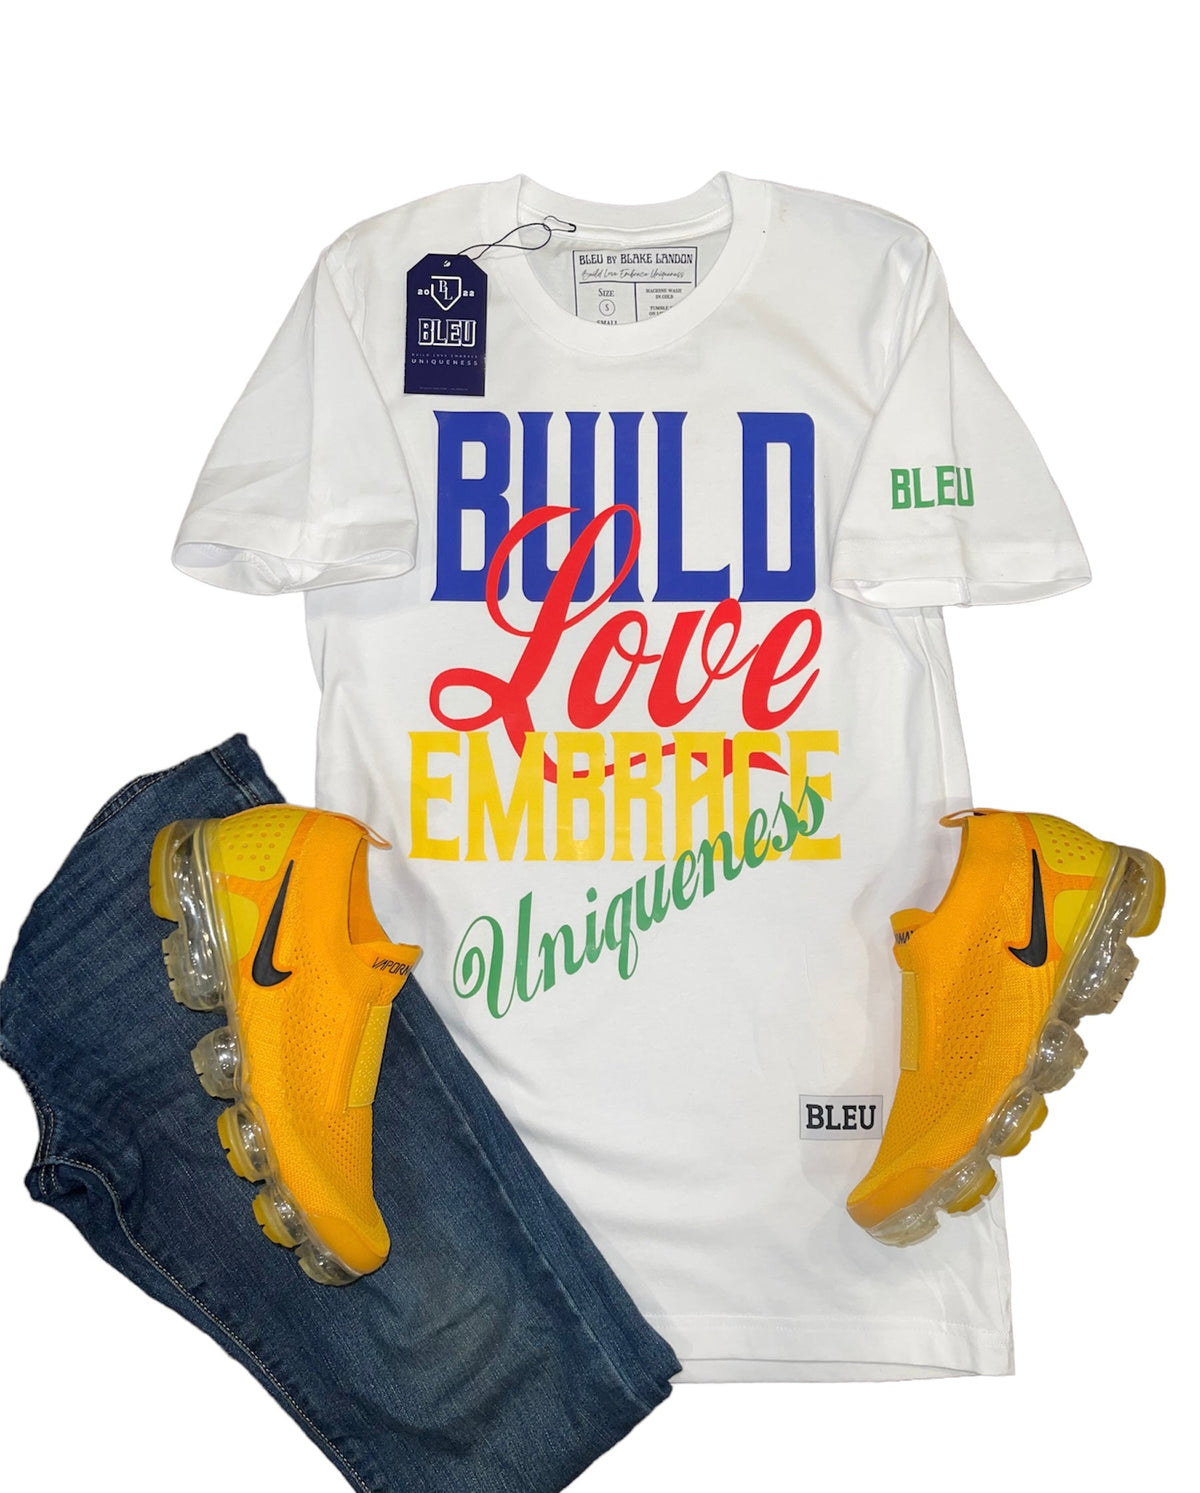 Build Love T shirt